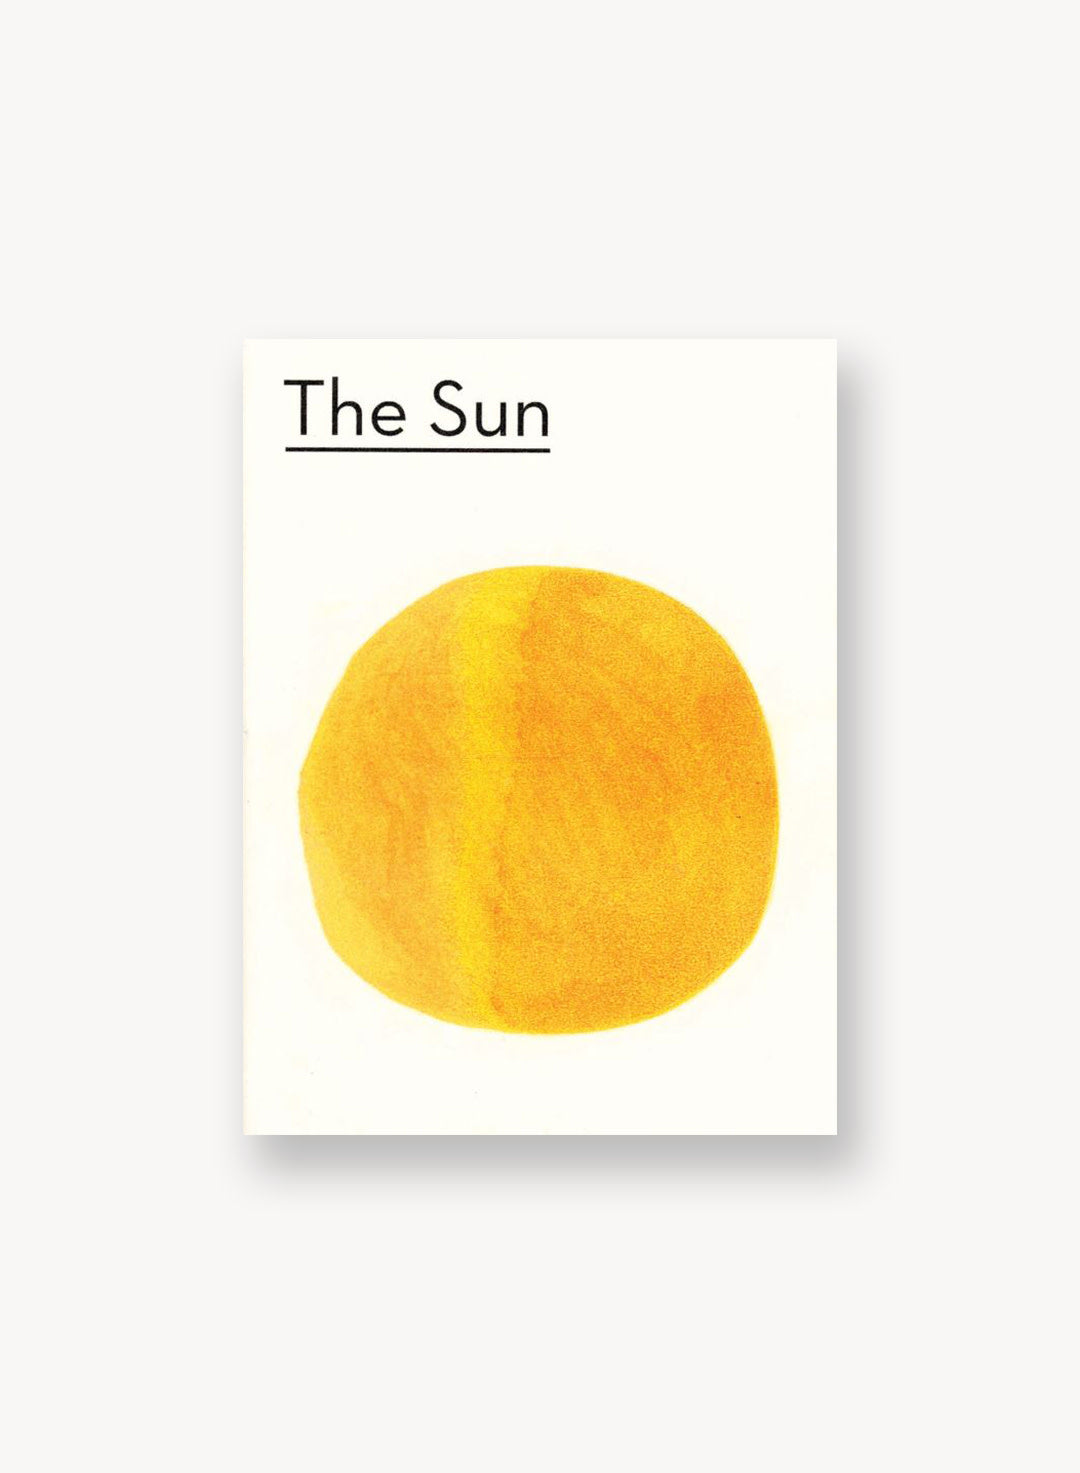 The Sun Zine